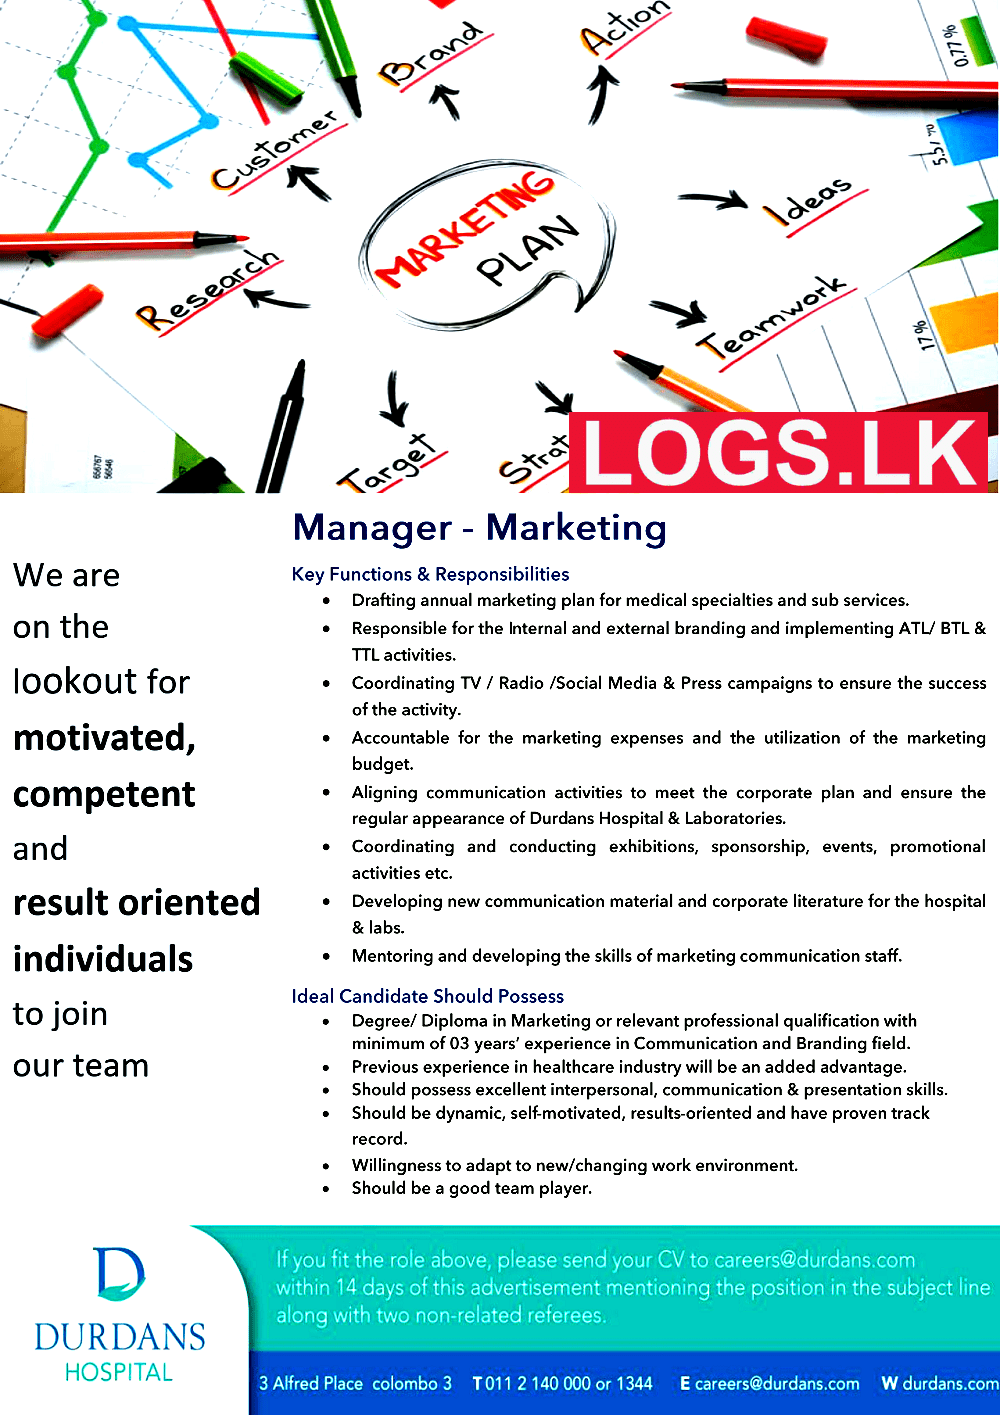 Manager (Marketing) Job Vacancy at Durdans Hospital Job Vacancies